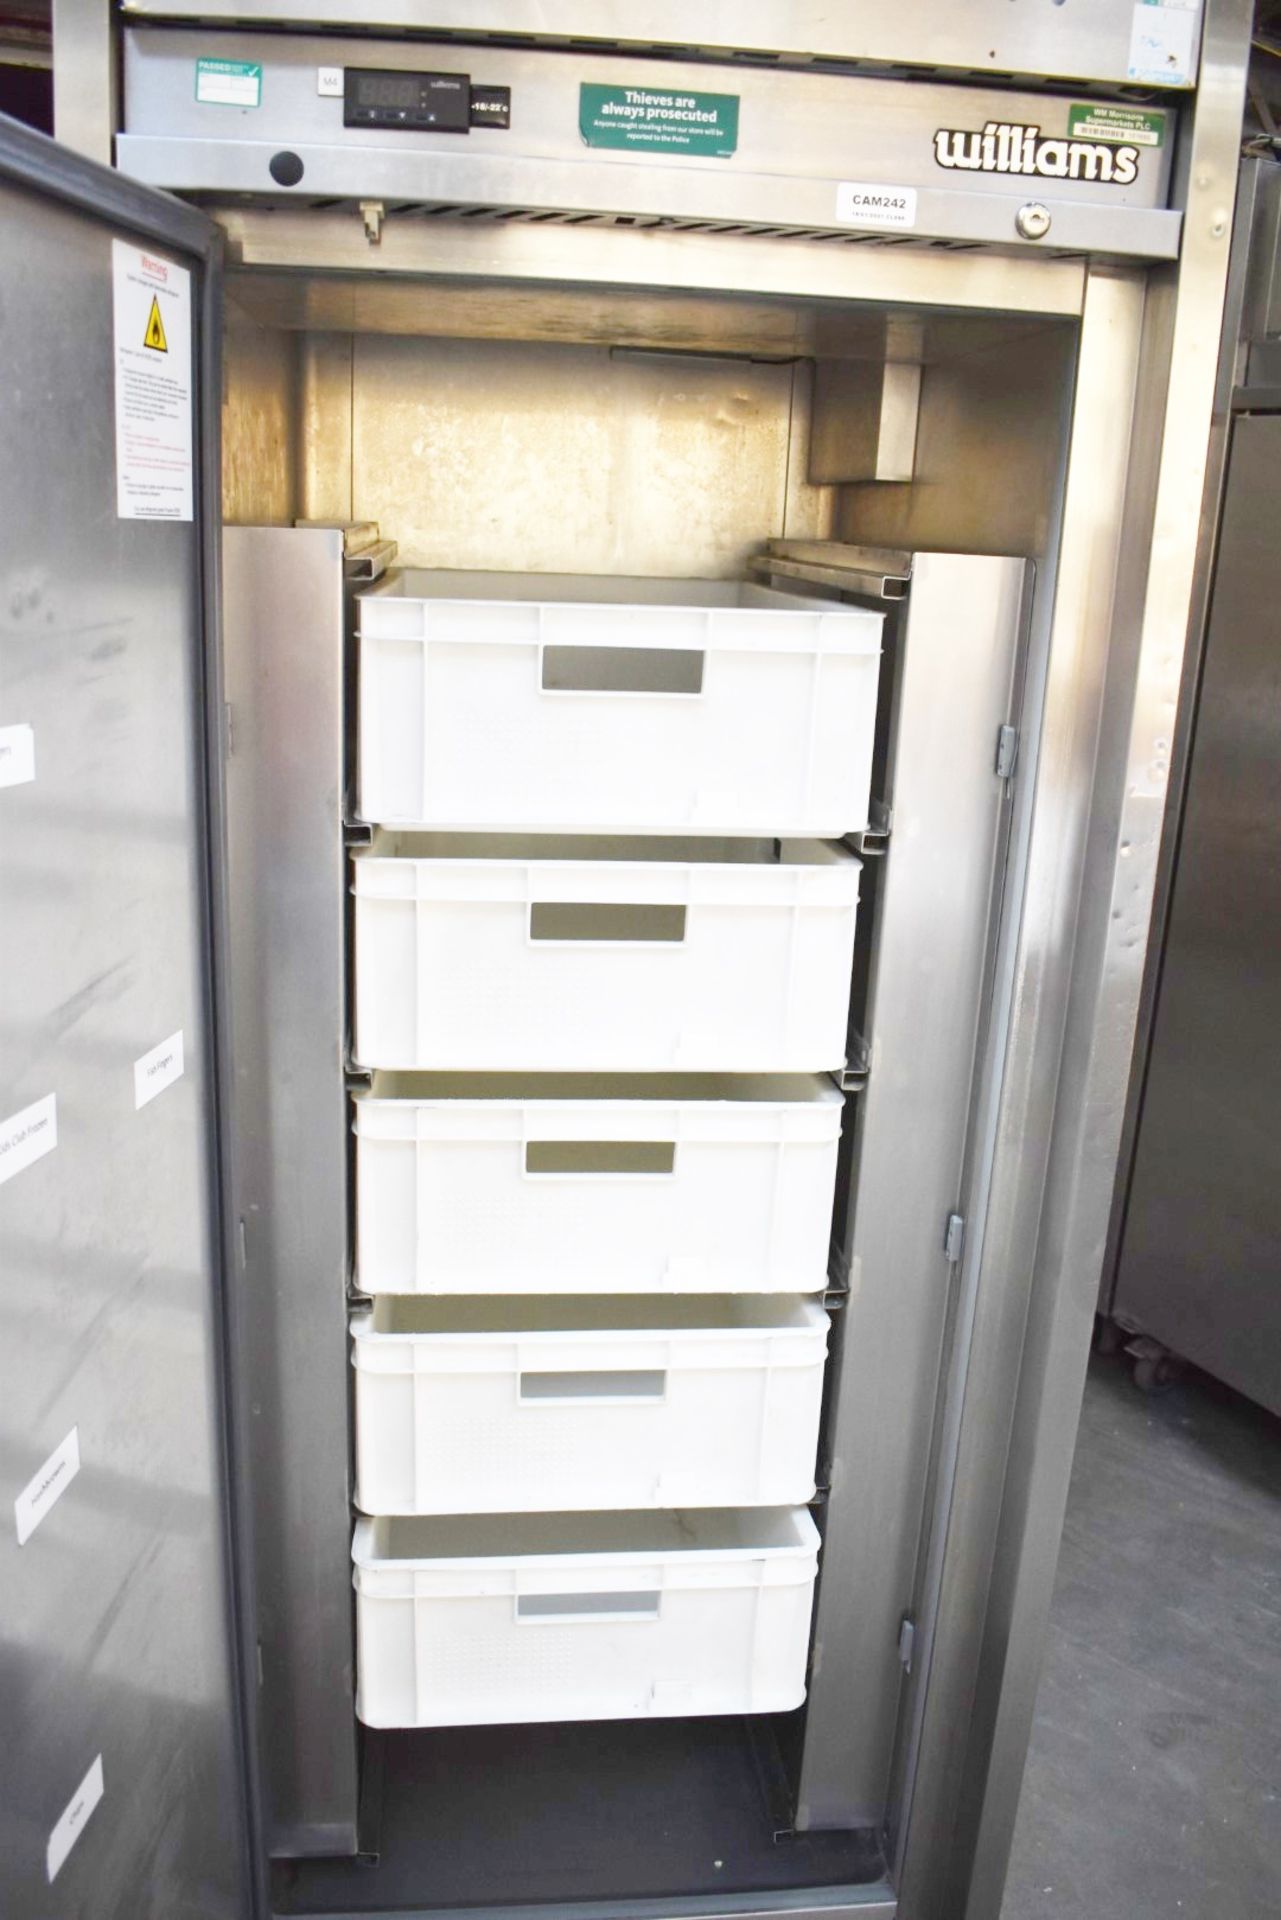 1 x Williams Jade Upright Single Door Refrigerator Stainless Steel Exterior & Internal Bakery Trays - Image 3 of 8